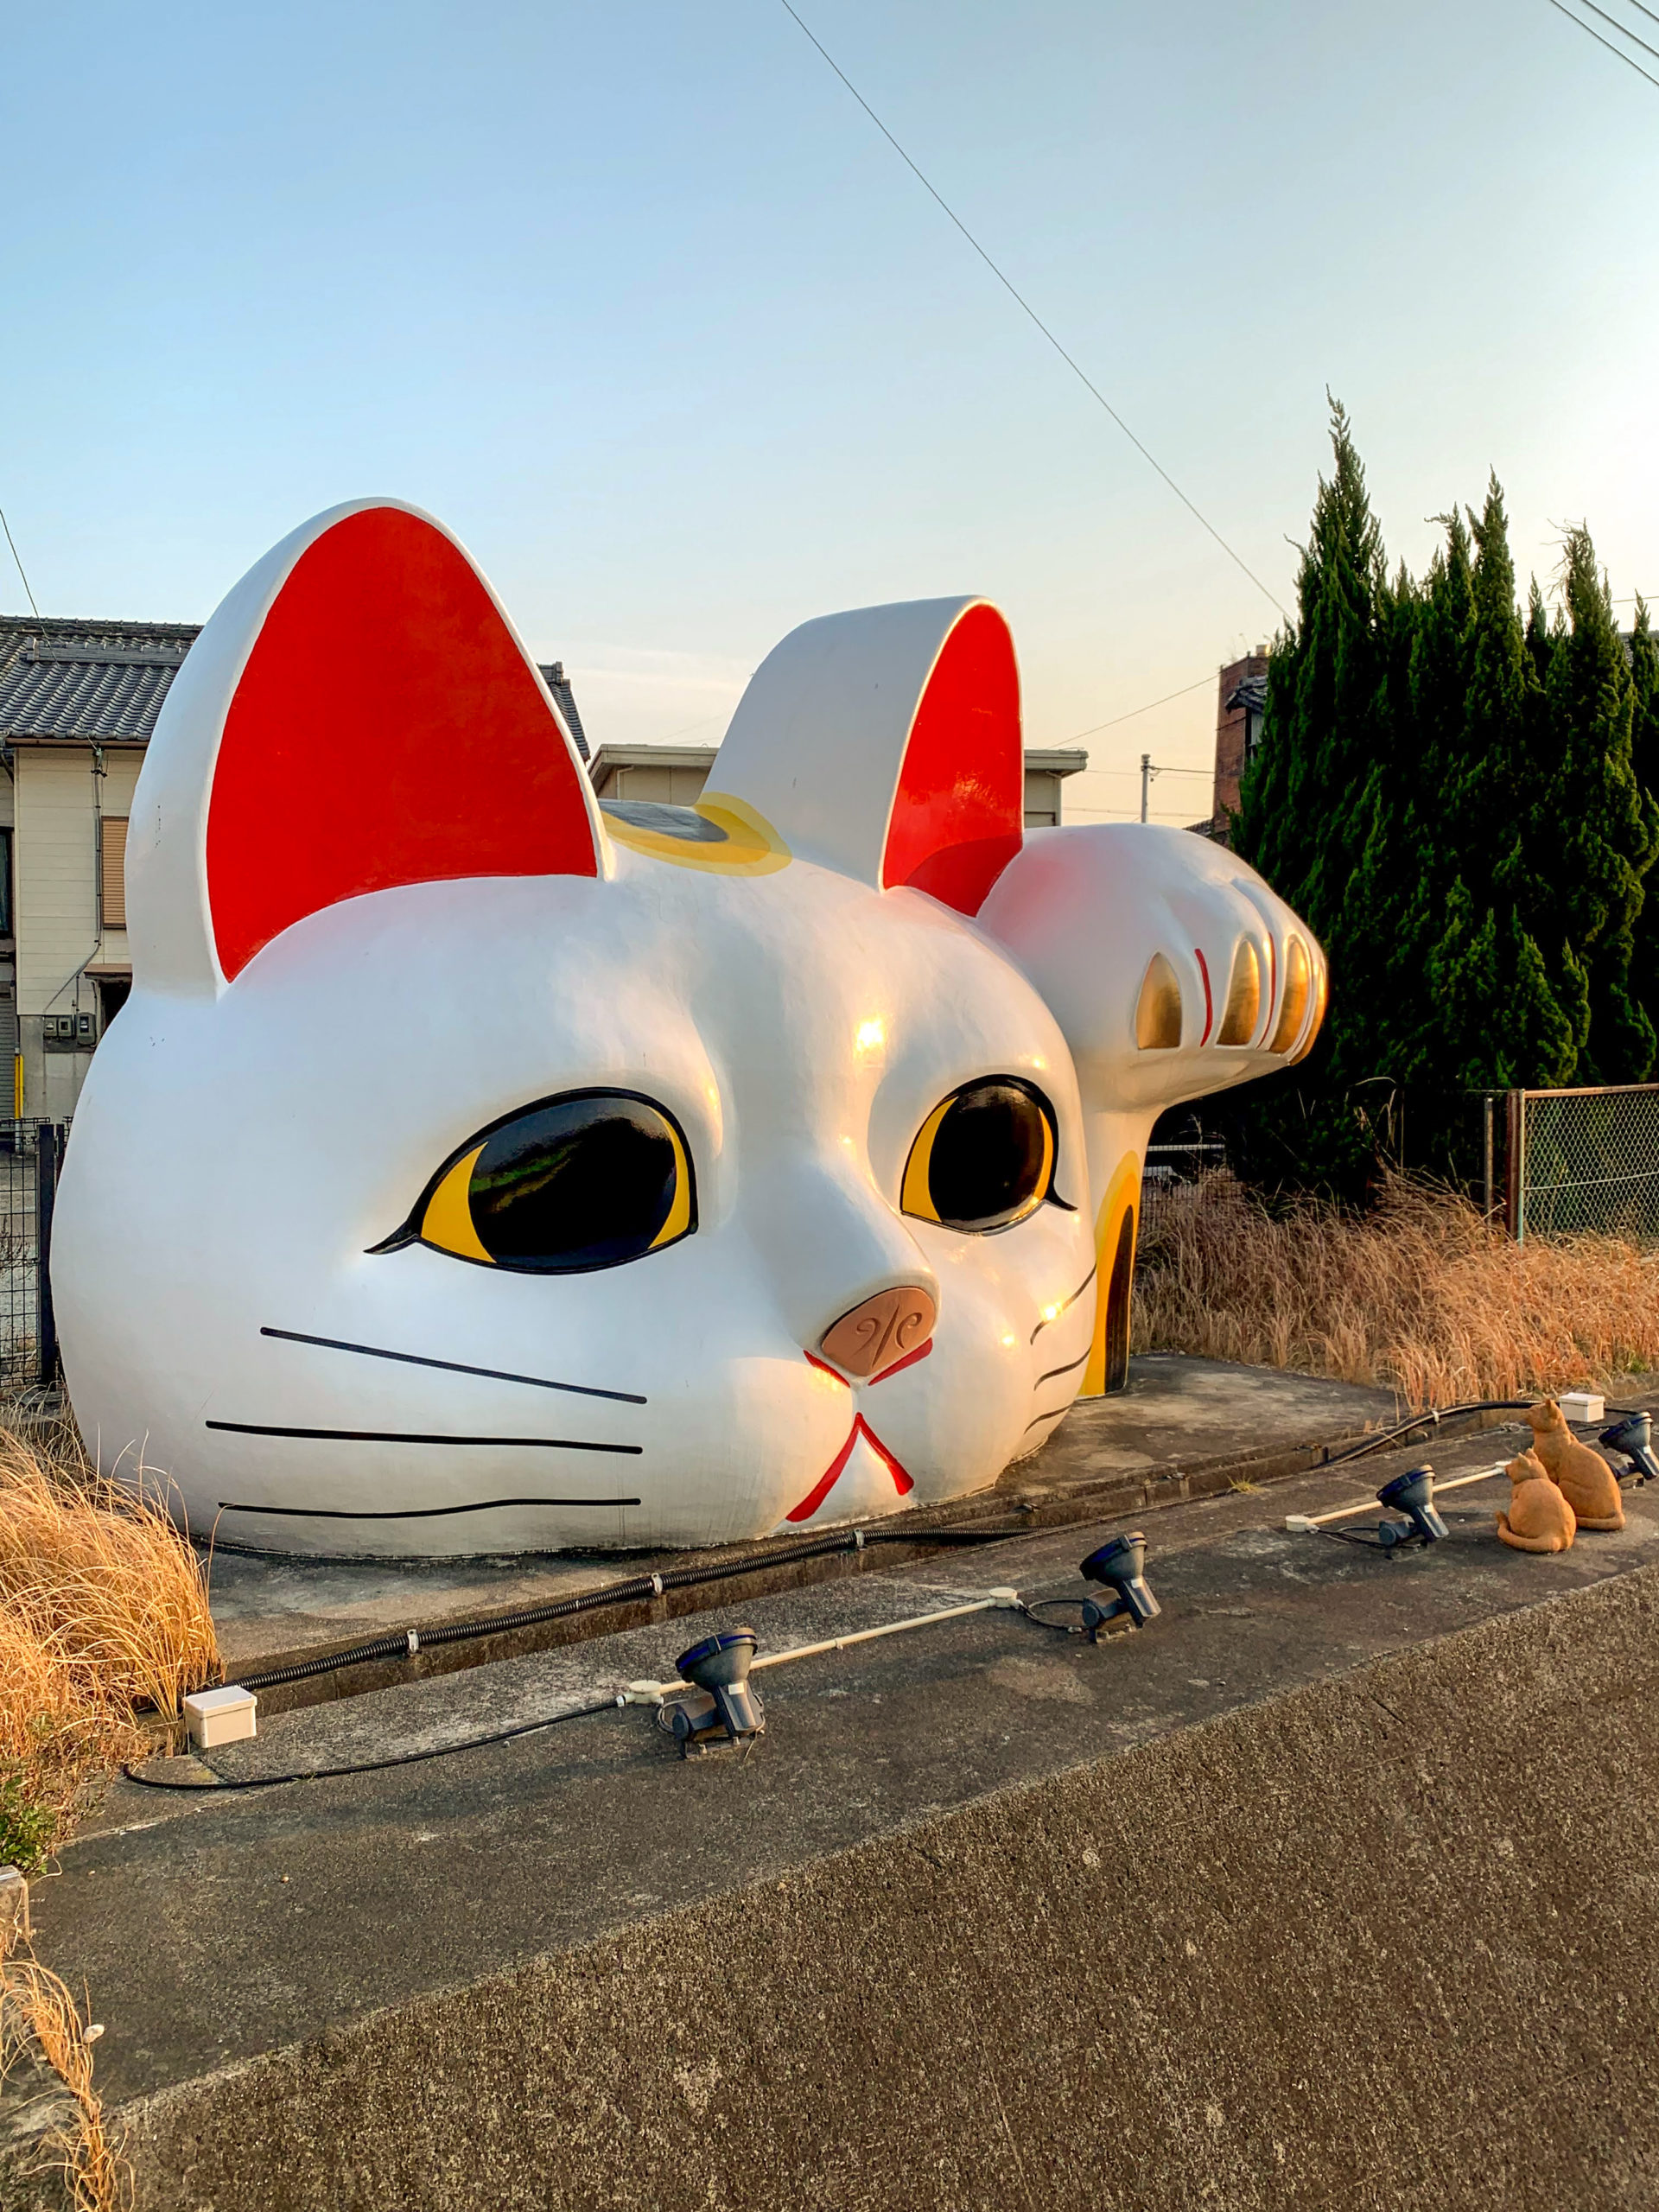 Porte-clé chat porte-bonheur Maneki Neko avec clochette : Attirez